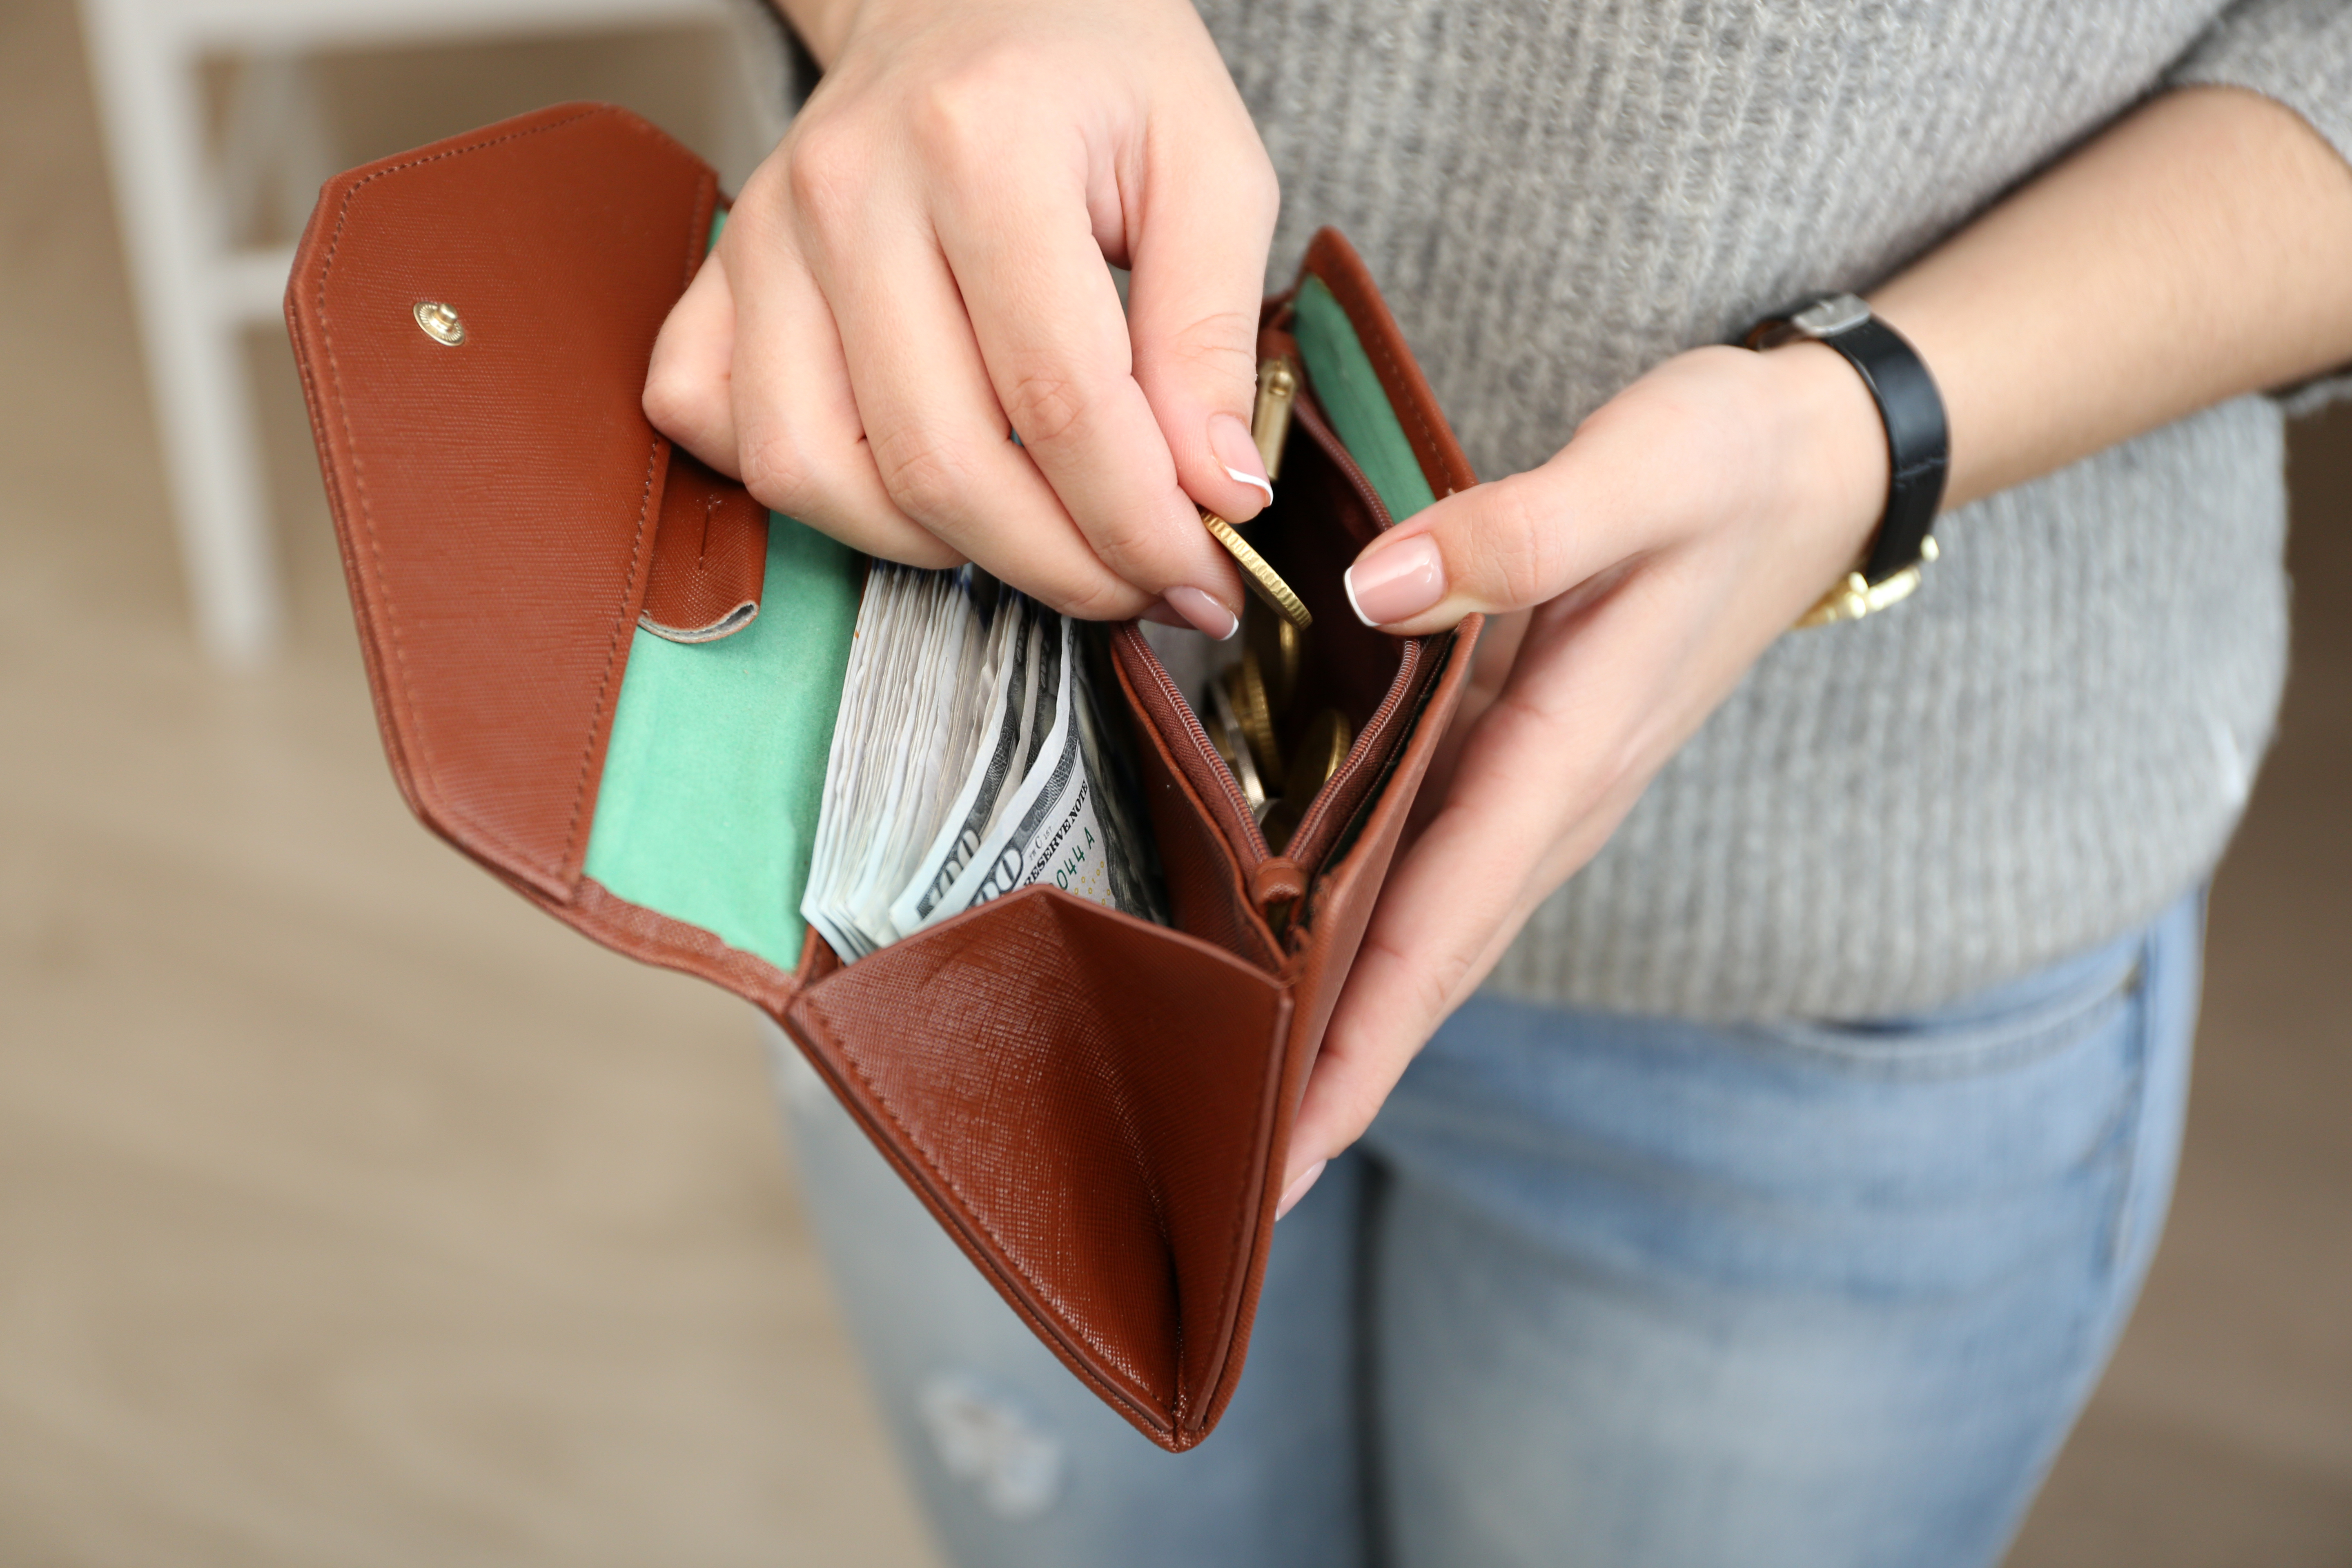 Lost wallet holding by woman | Shutterstock